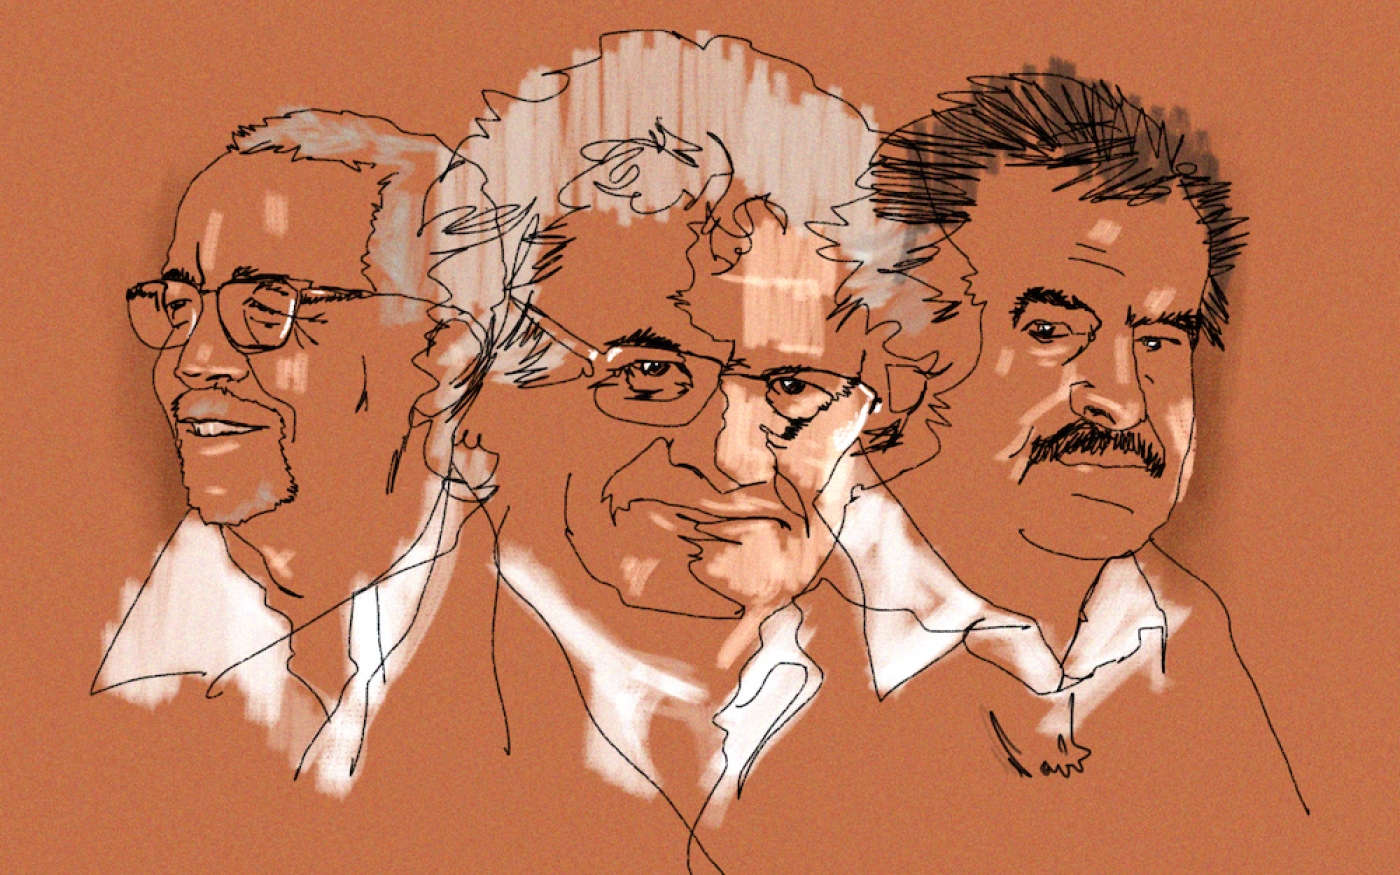 Portraits des trois romanciers arabes (de gauche à droite) Yasmina Khadra, Amin Maalouf et Walid Saif (illustration : Saad)